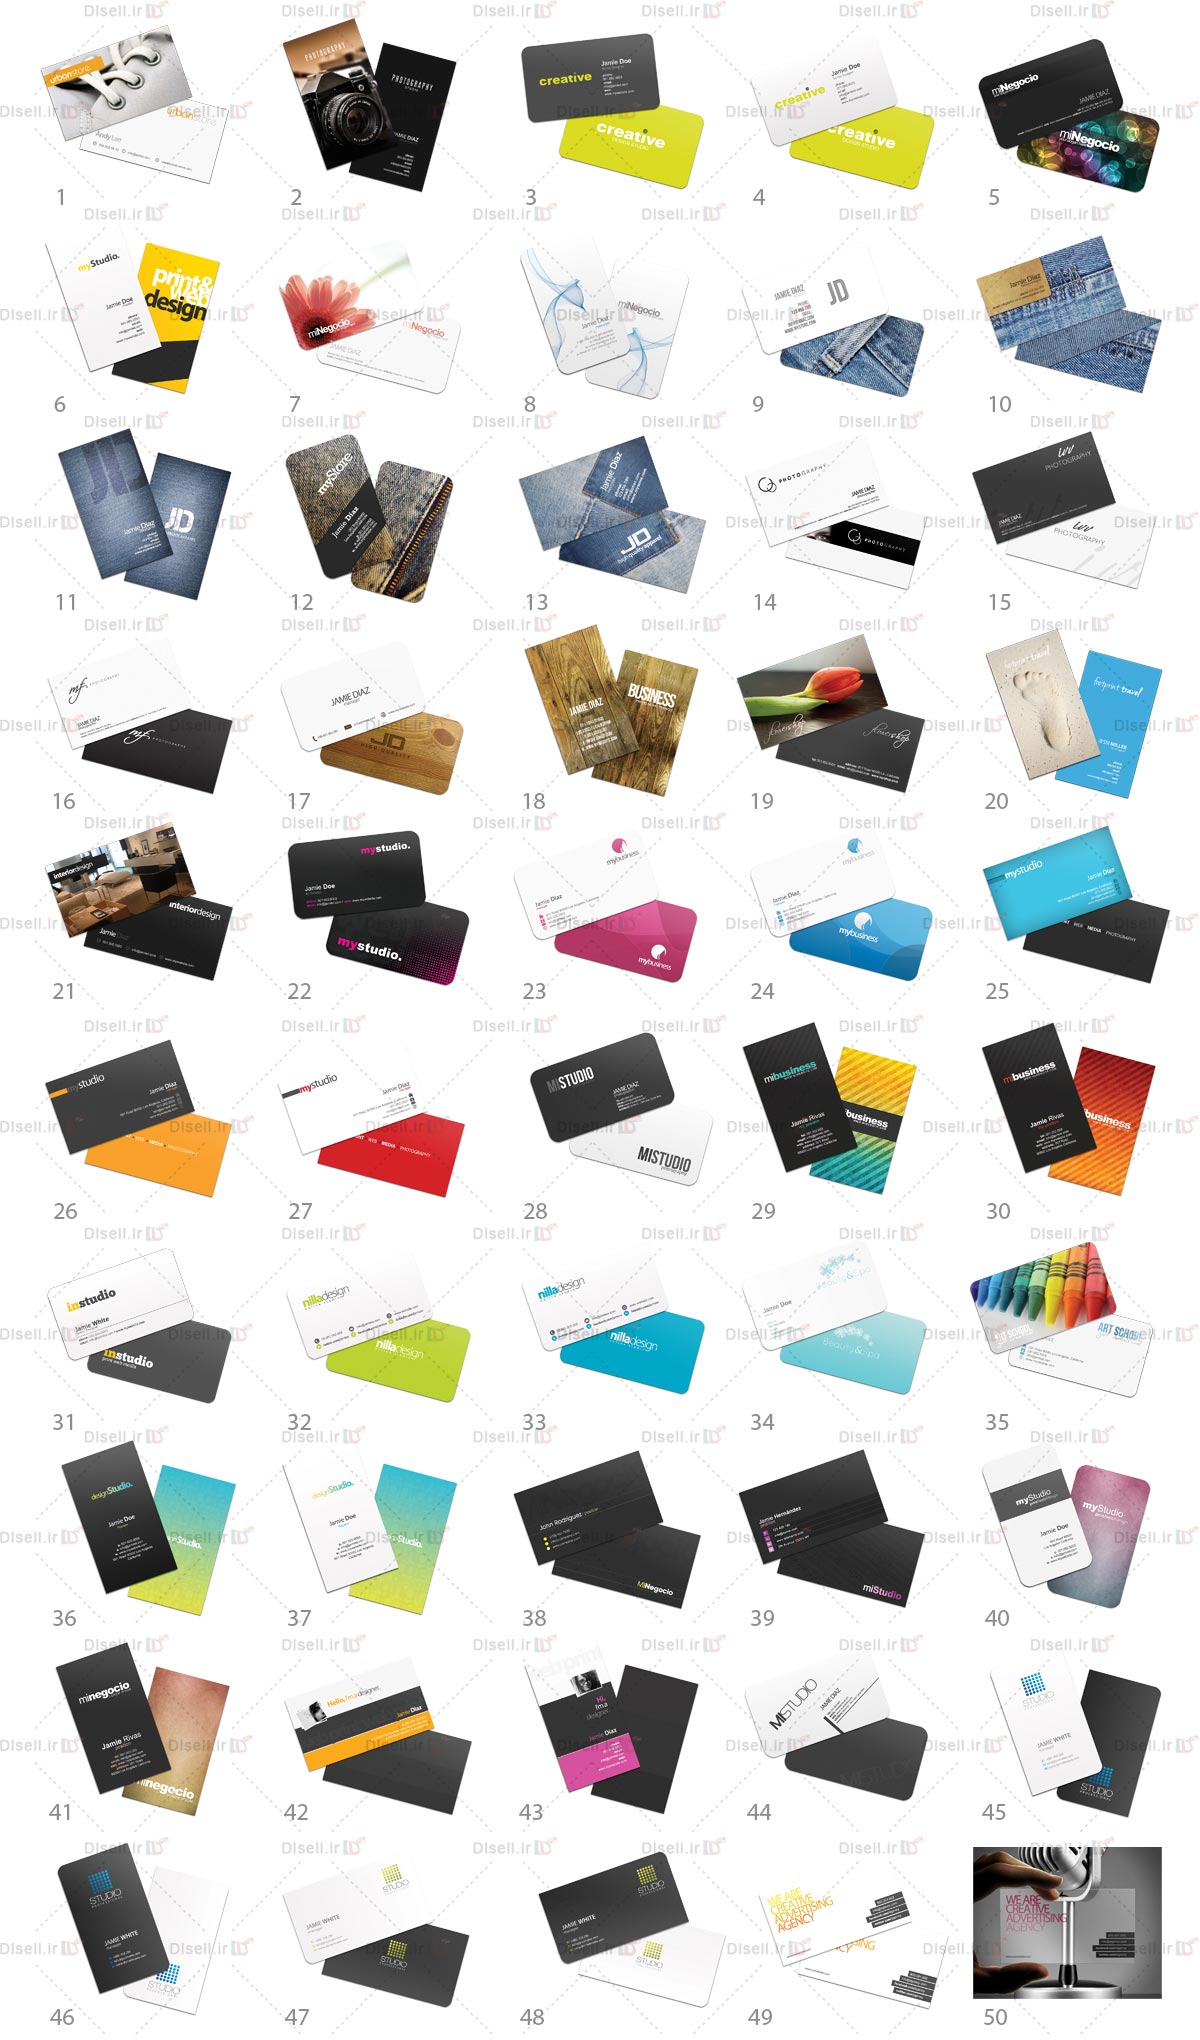 مجموعه 50 عدد قالب کارت ویزیت لایه باز - PSD Business Card template - پایگاه اینترنتی دی ال سل